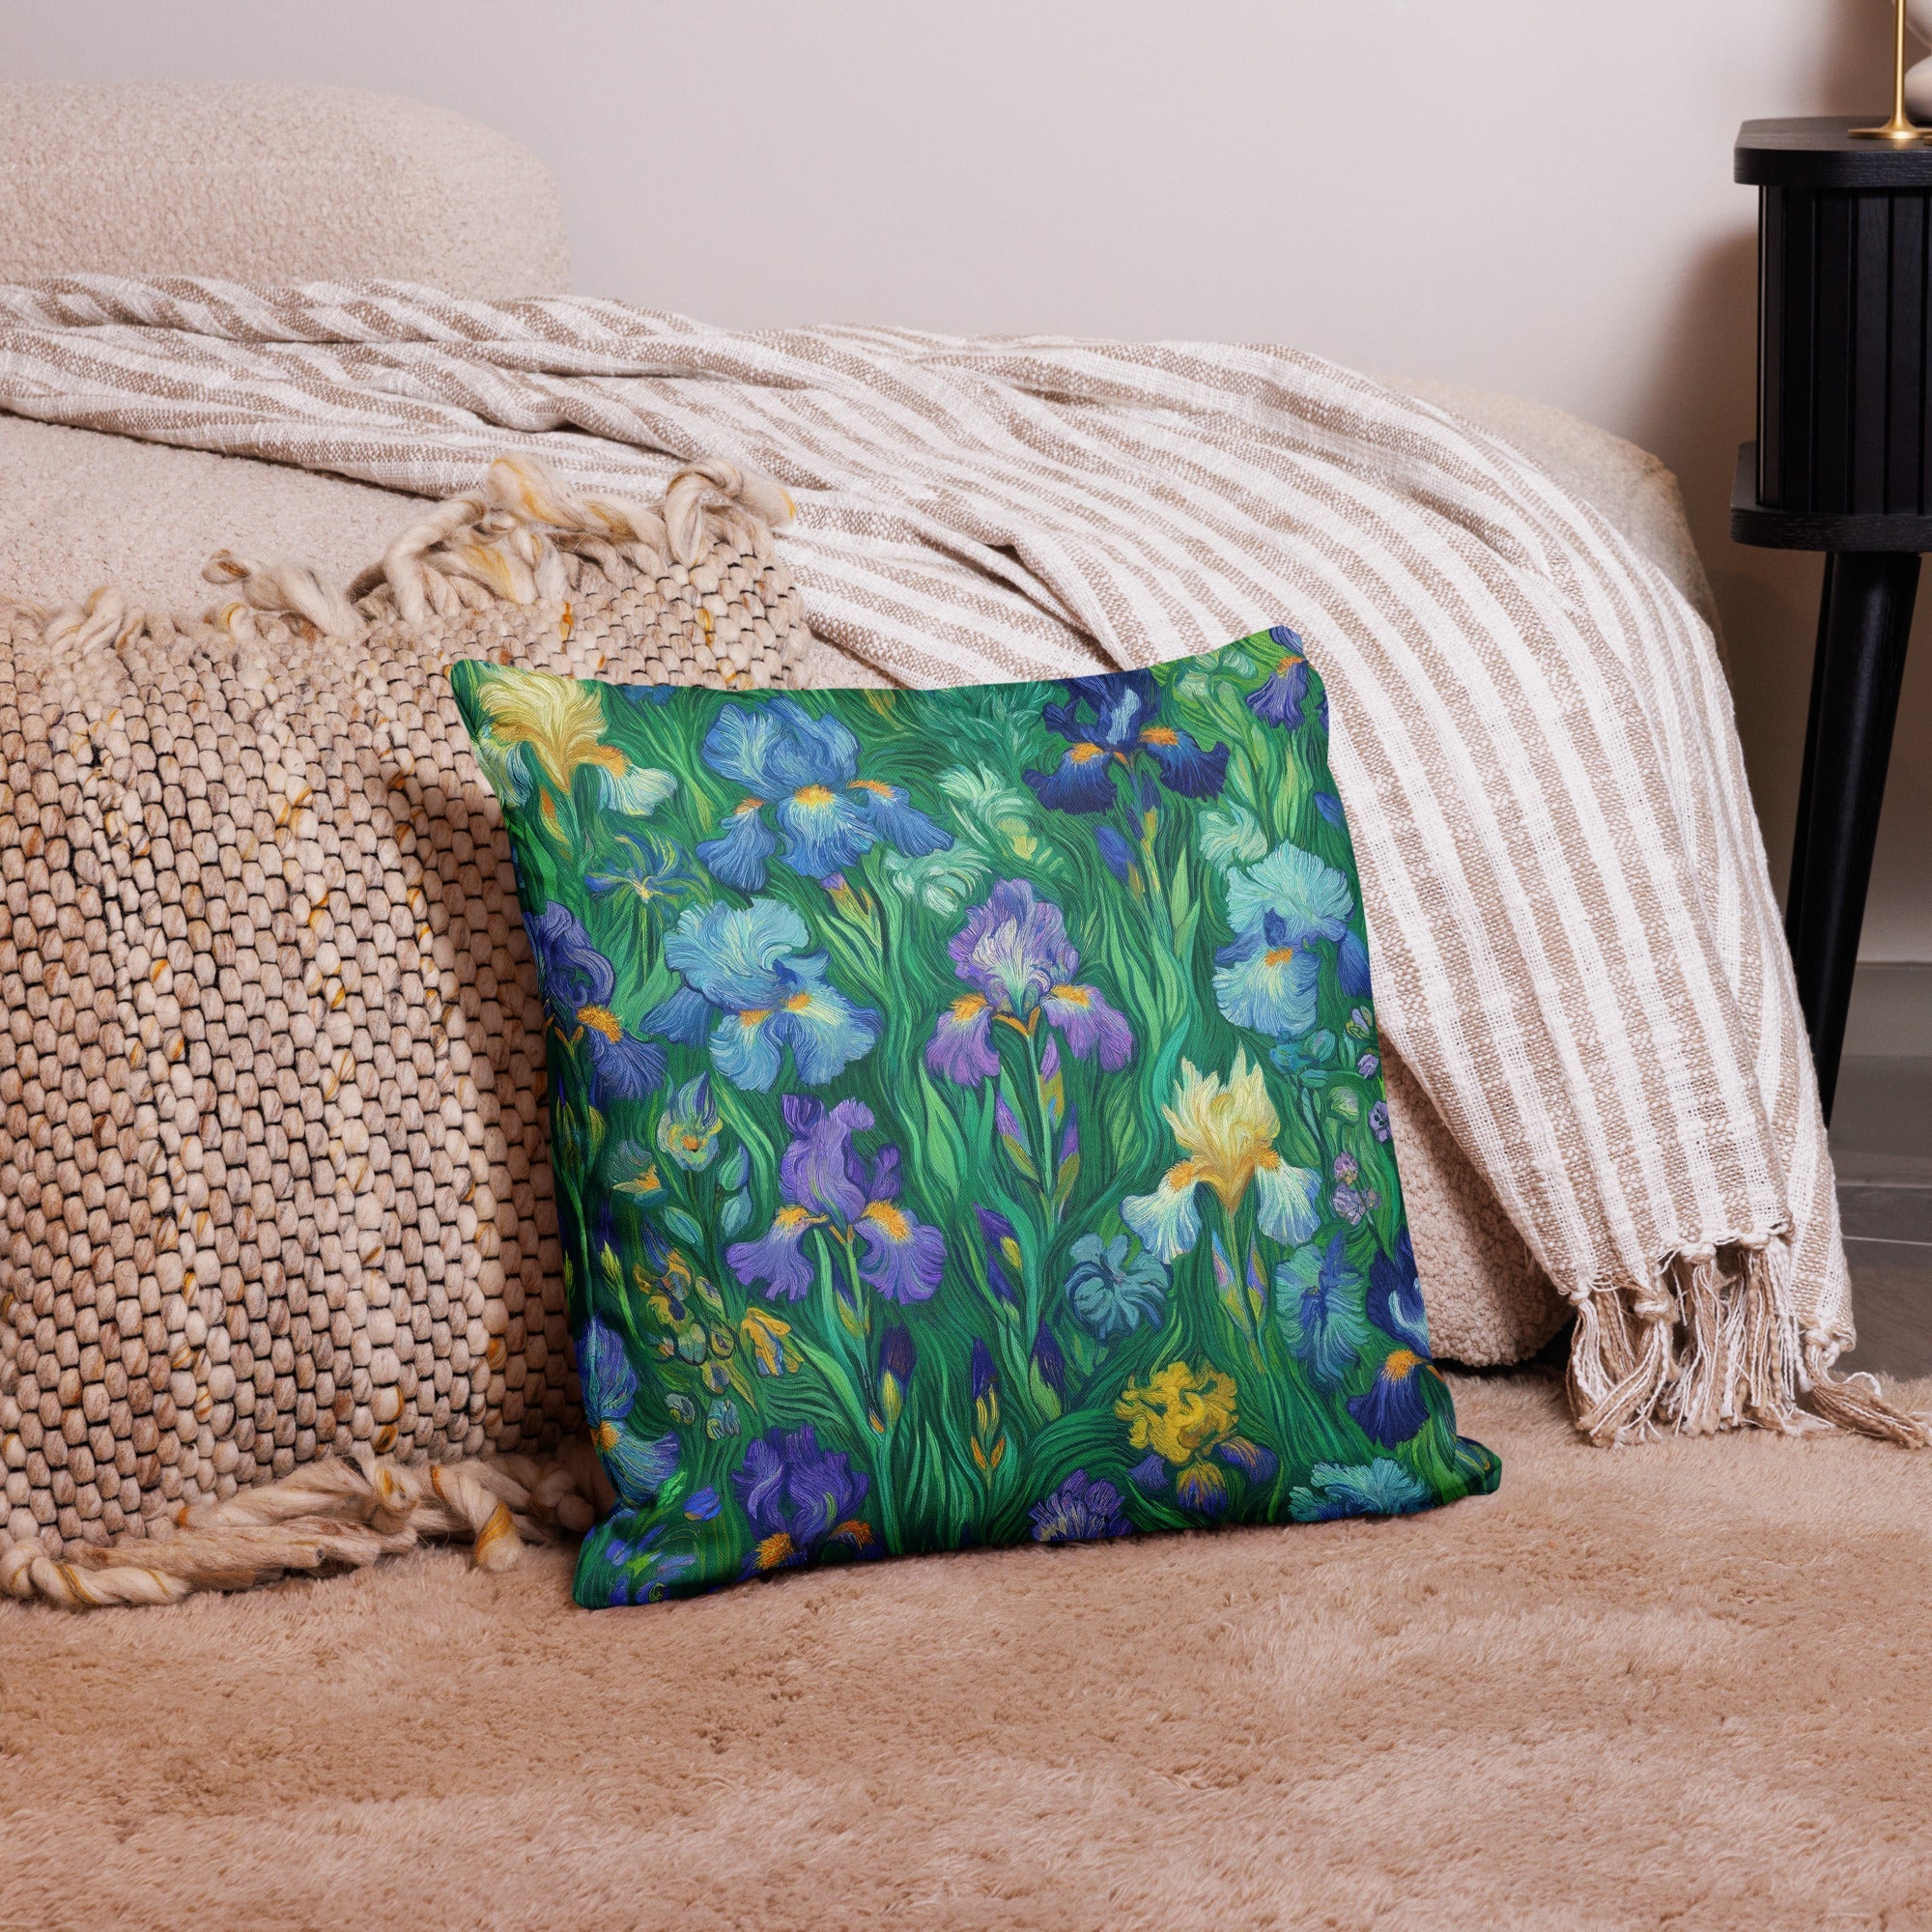 Vincent van Gogh 'Irises' Famous Painting Premium Pillow | Premium Art Cushion